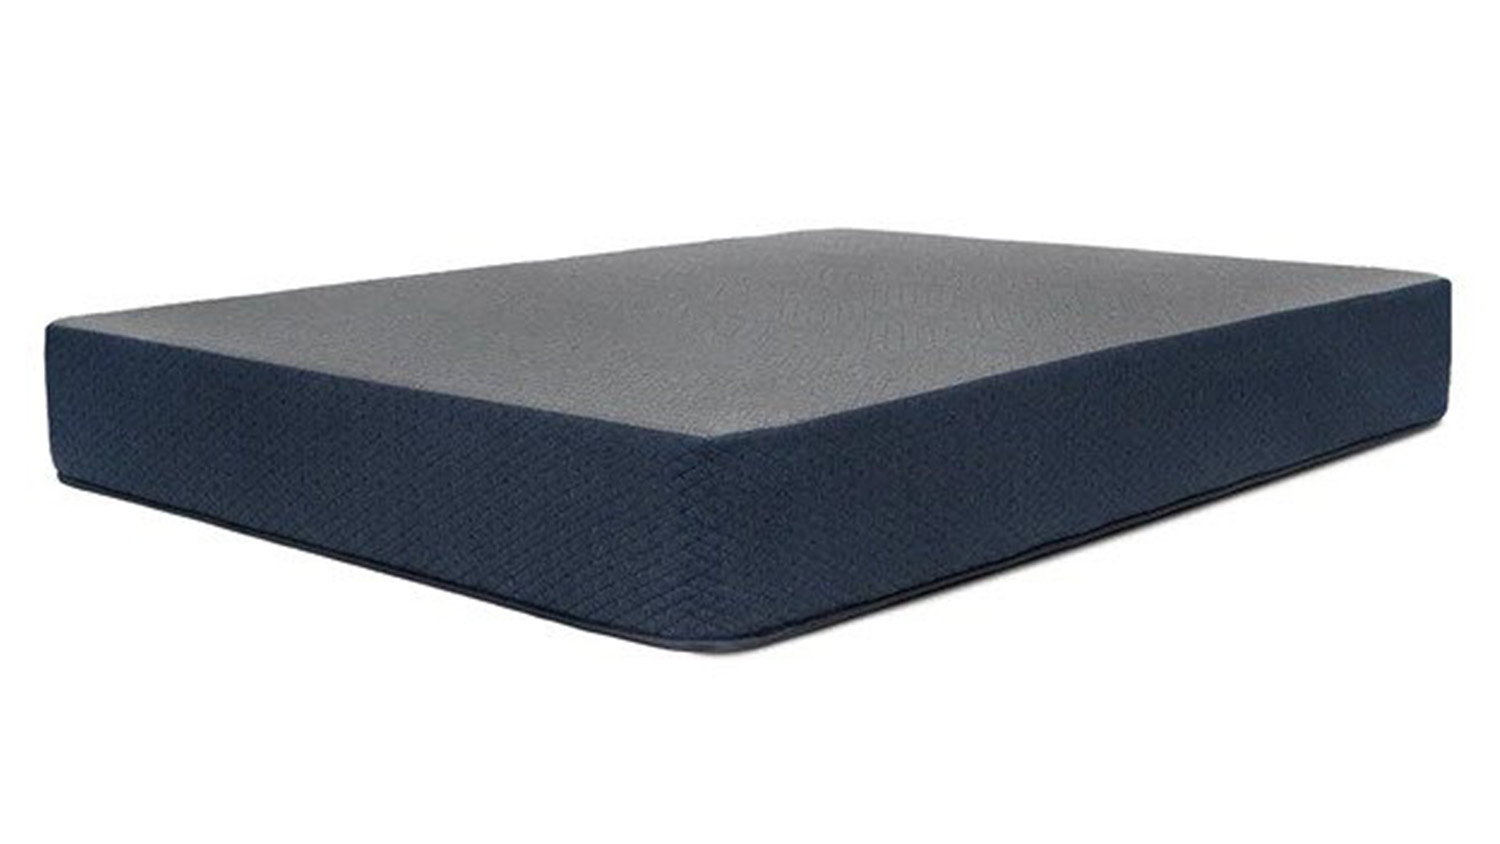 Best budget mattress: The Brooklyn Bedding Chill Mattress in black on a white background